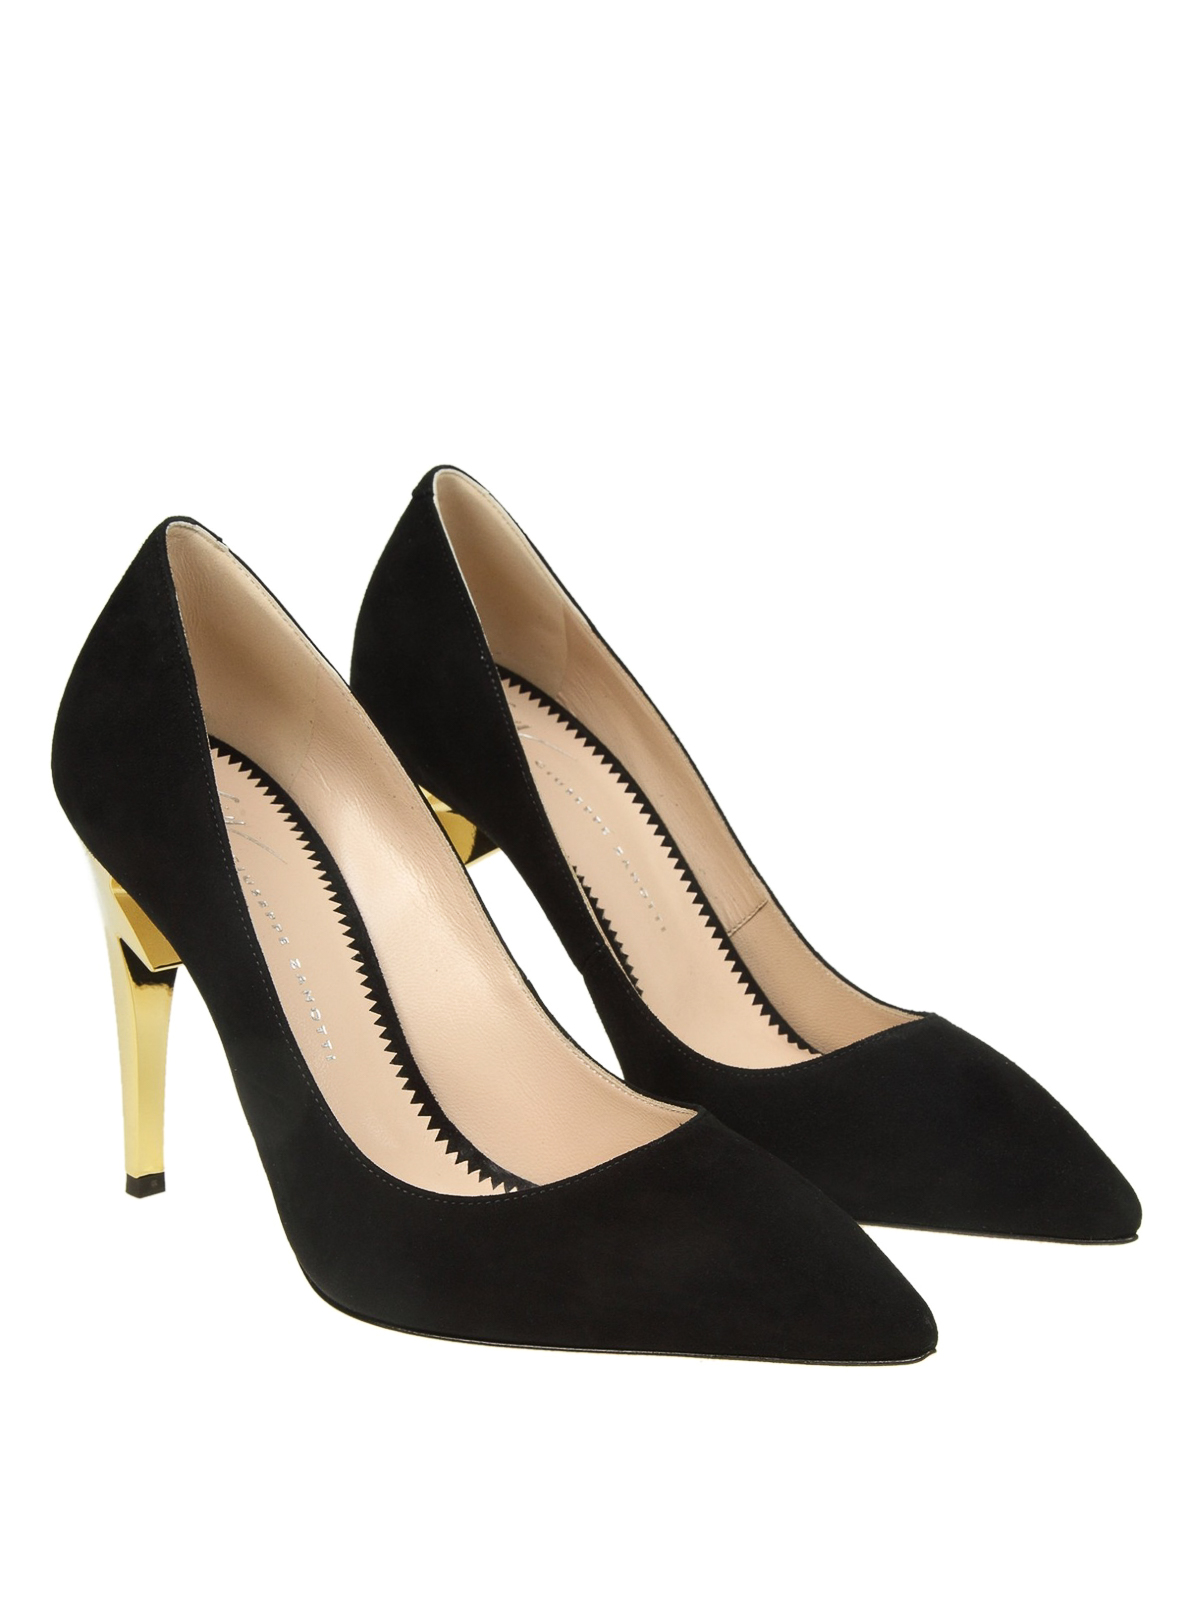 Court shoes Giuseppe Zanotti - G-Heel black suede pumps I860003006